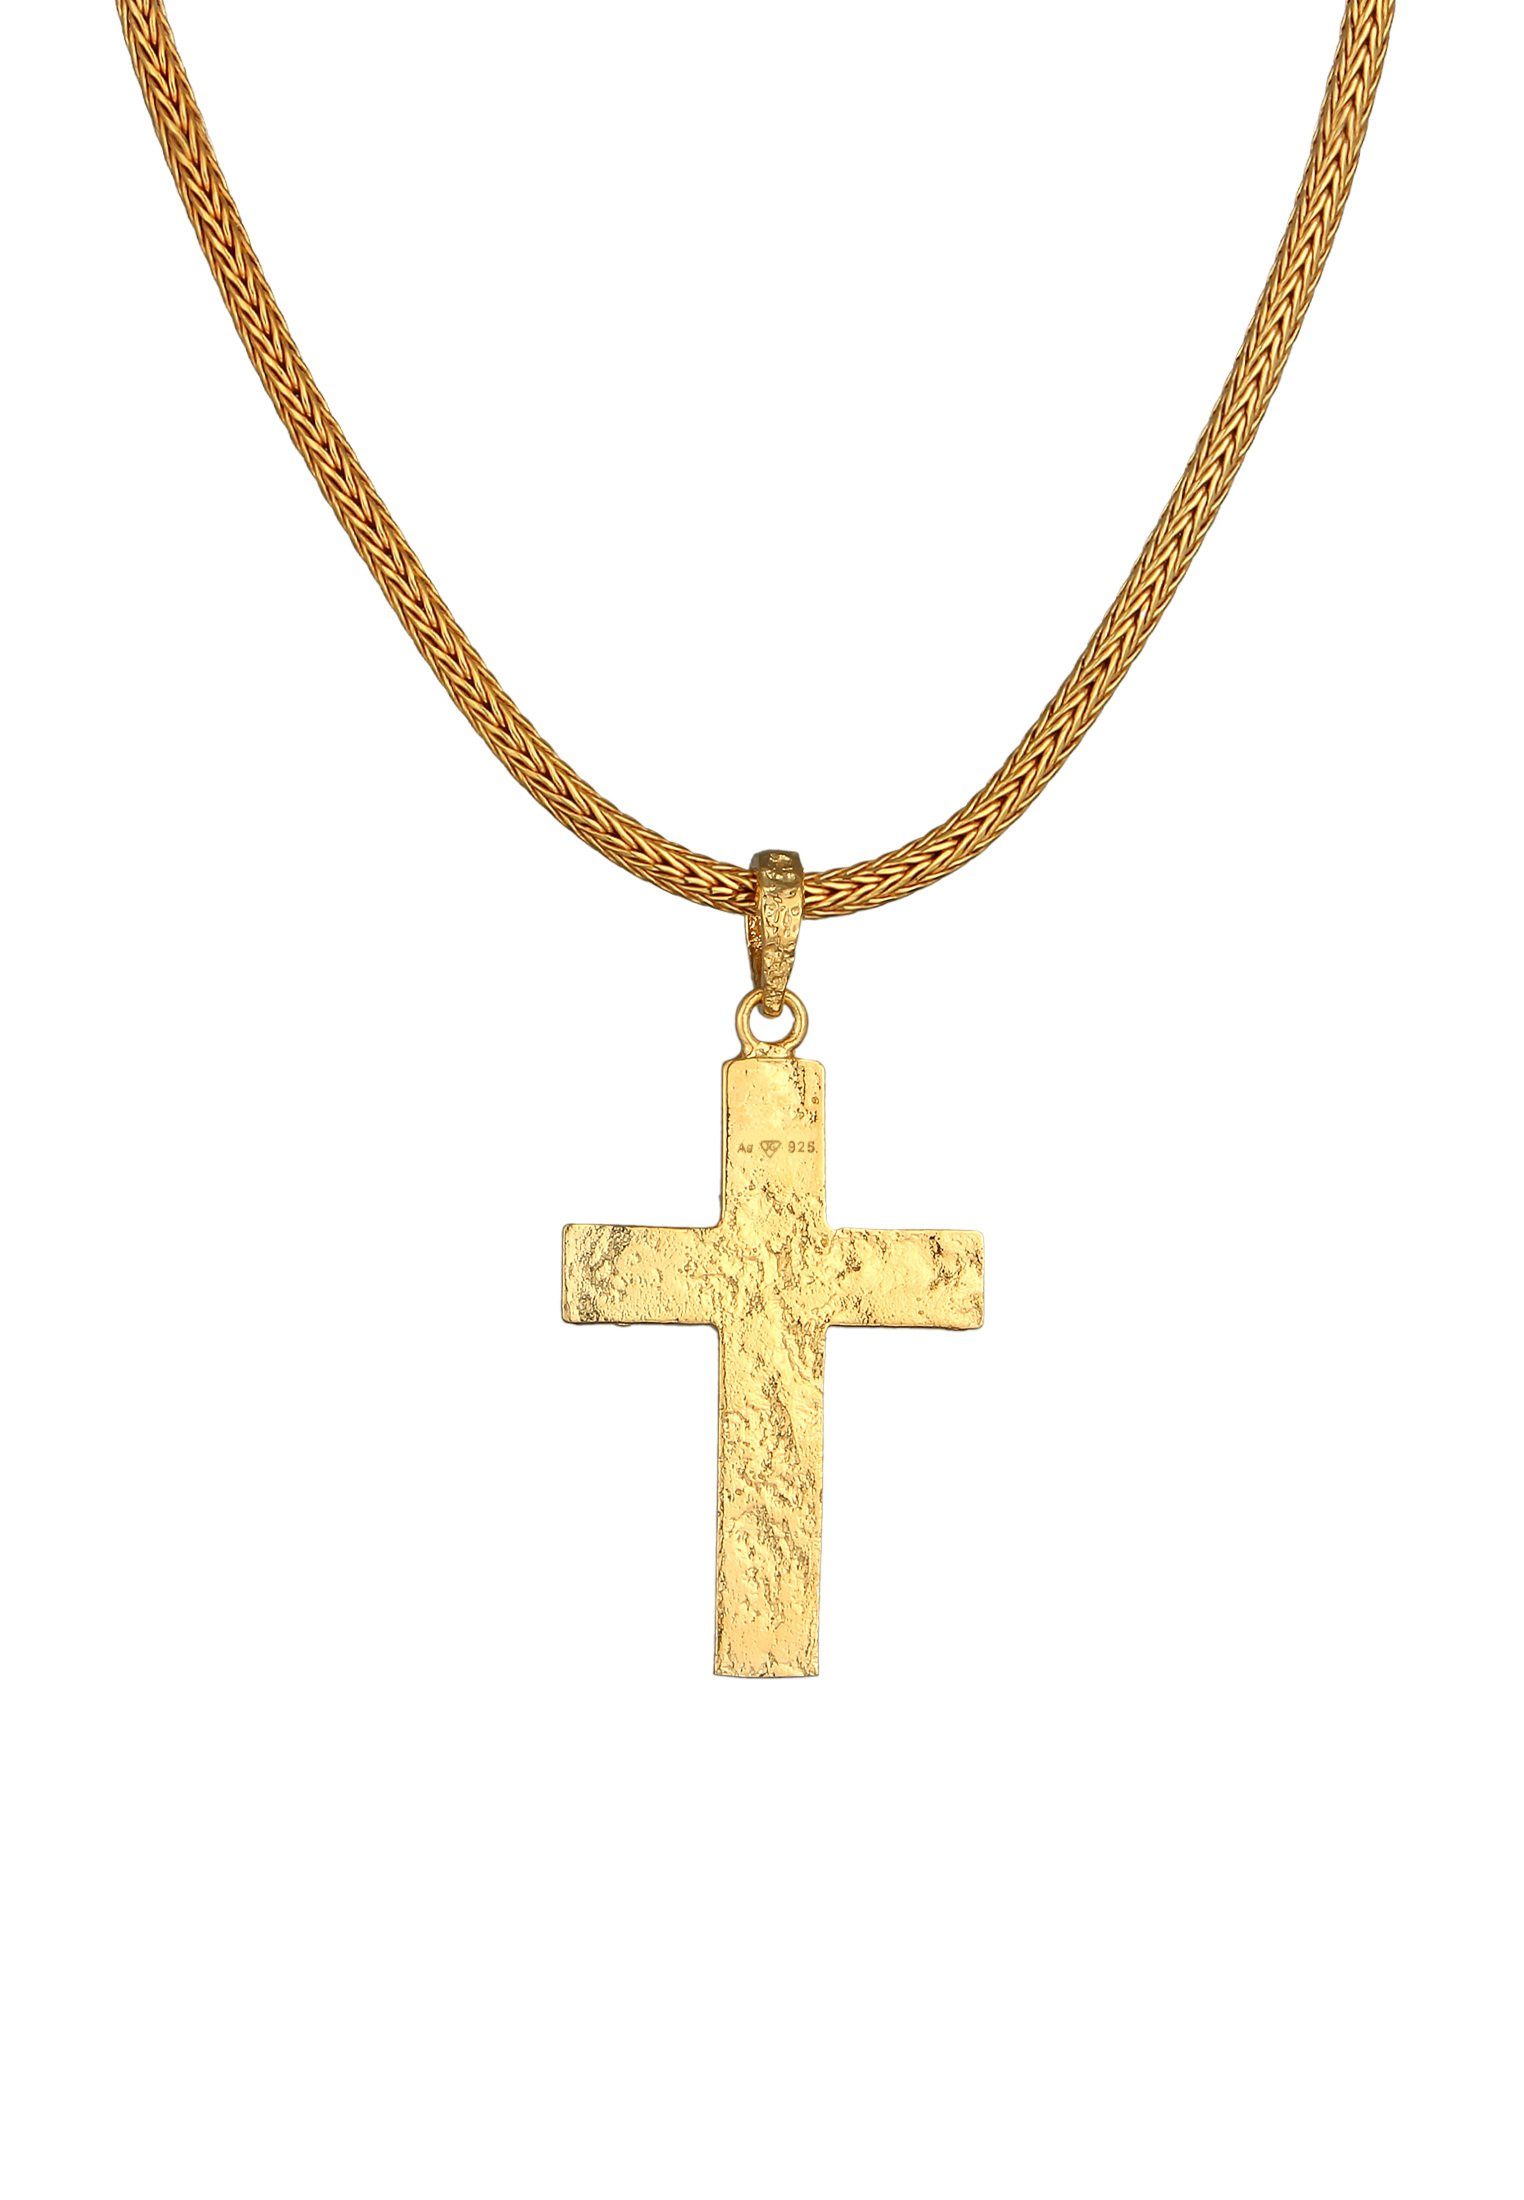 Gehämmert Herren Gold Kreuz 925 Anhänger Kette mit Zopfkette Kreuz Silber, Kuzzoi